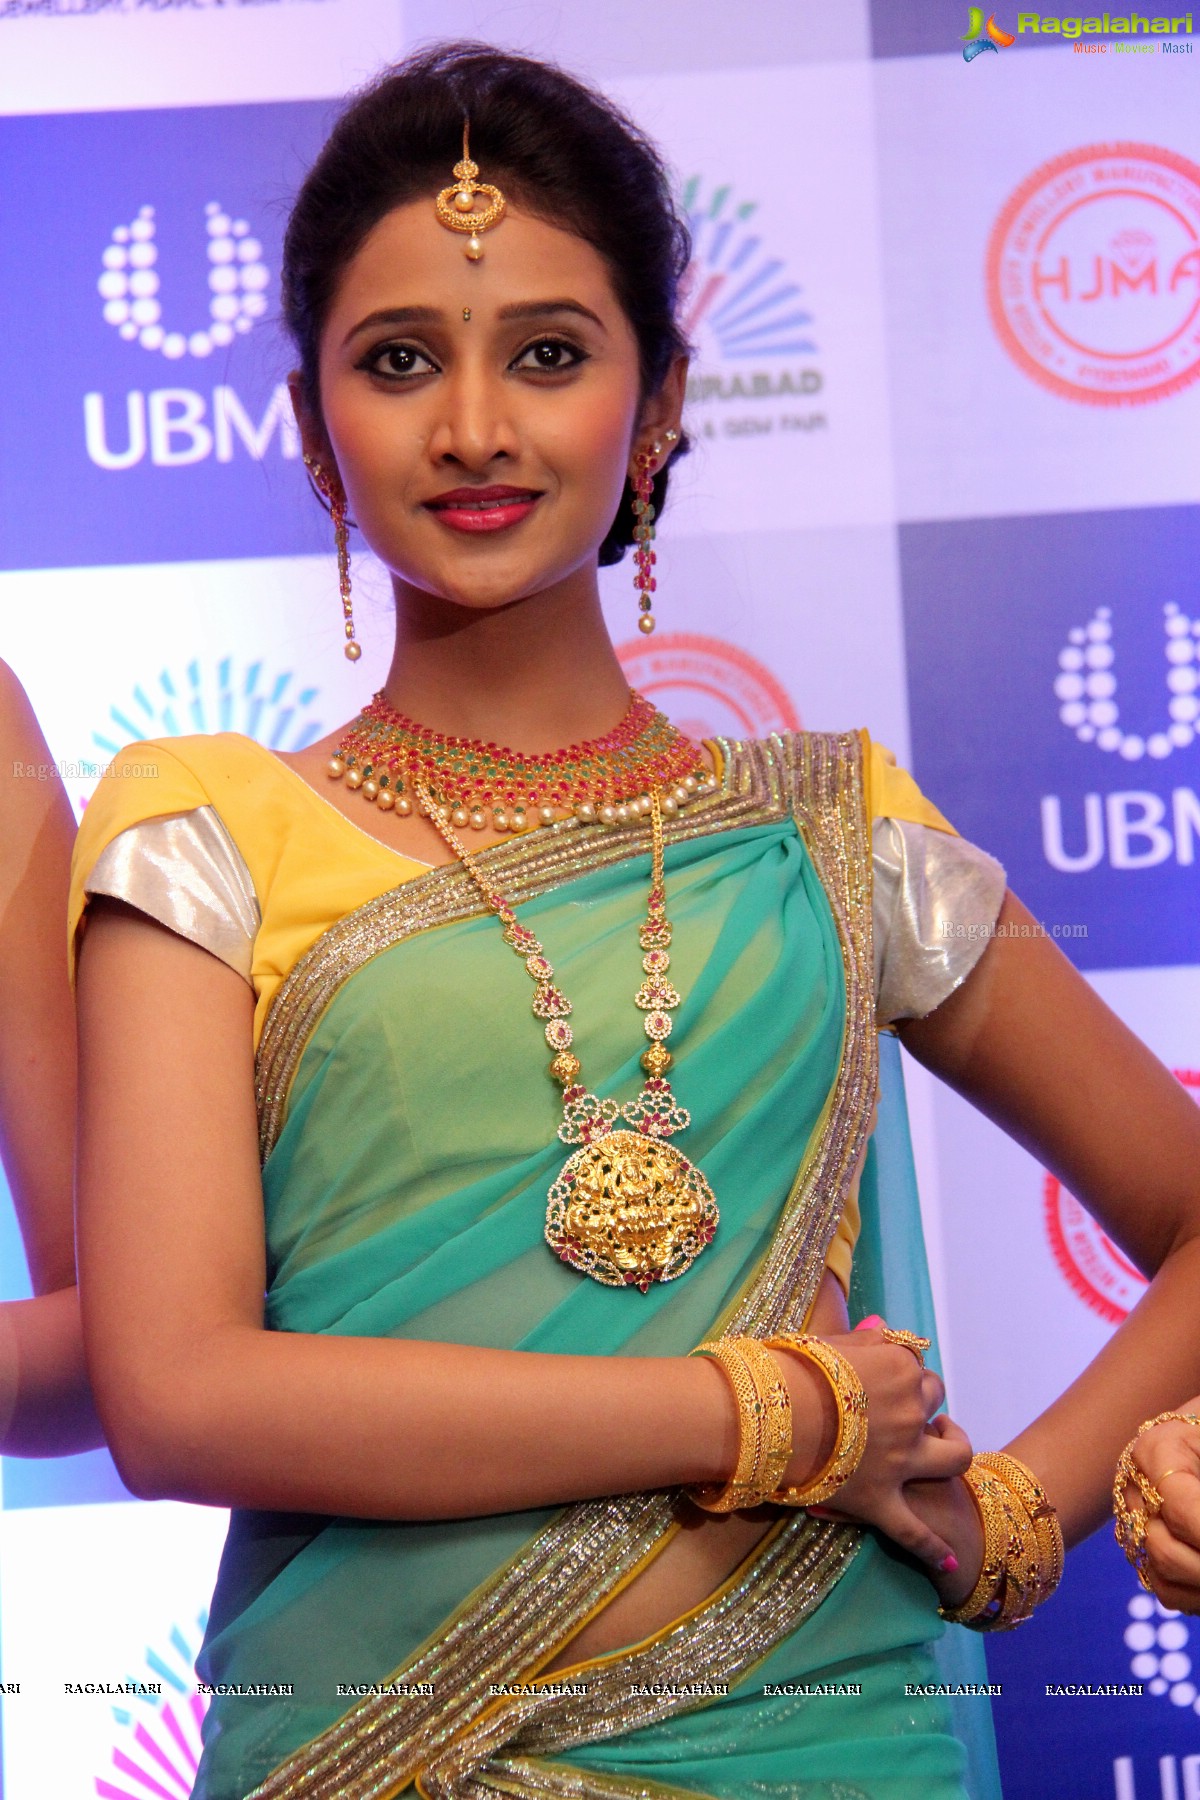 UBM India Hyderabad Jewellery Pearl and Gem Fair Announcement